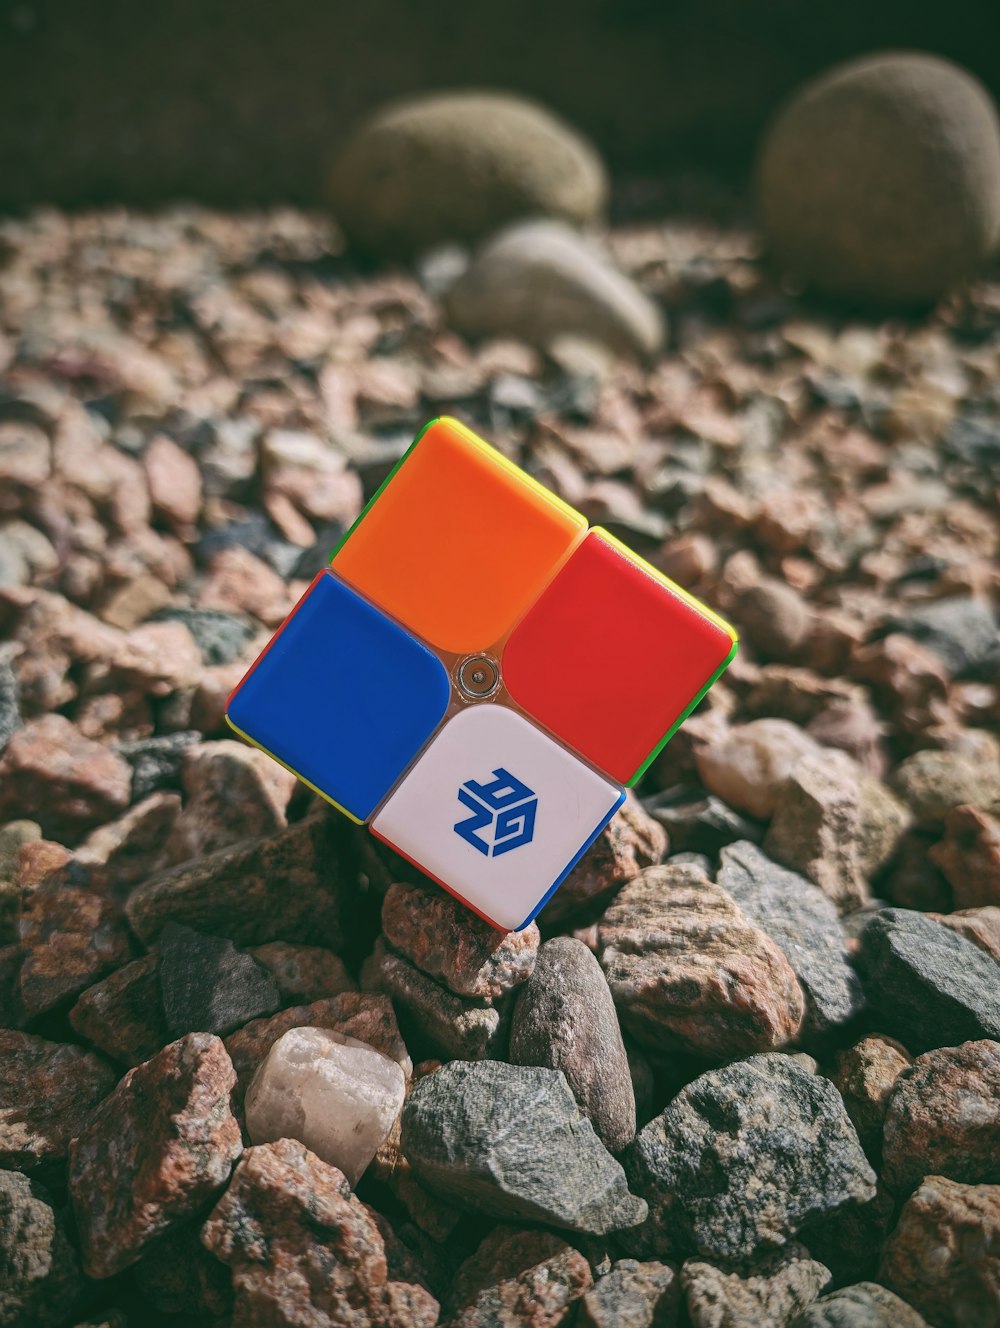 Un cubo di Rubik seduto in cima a un mucchio di rocce